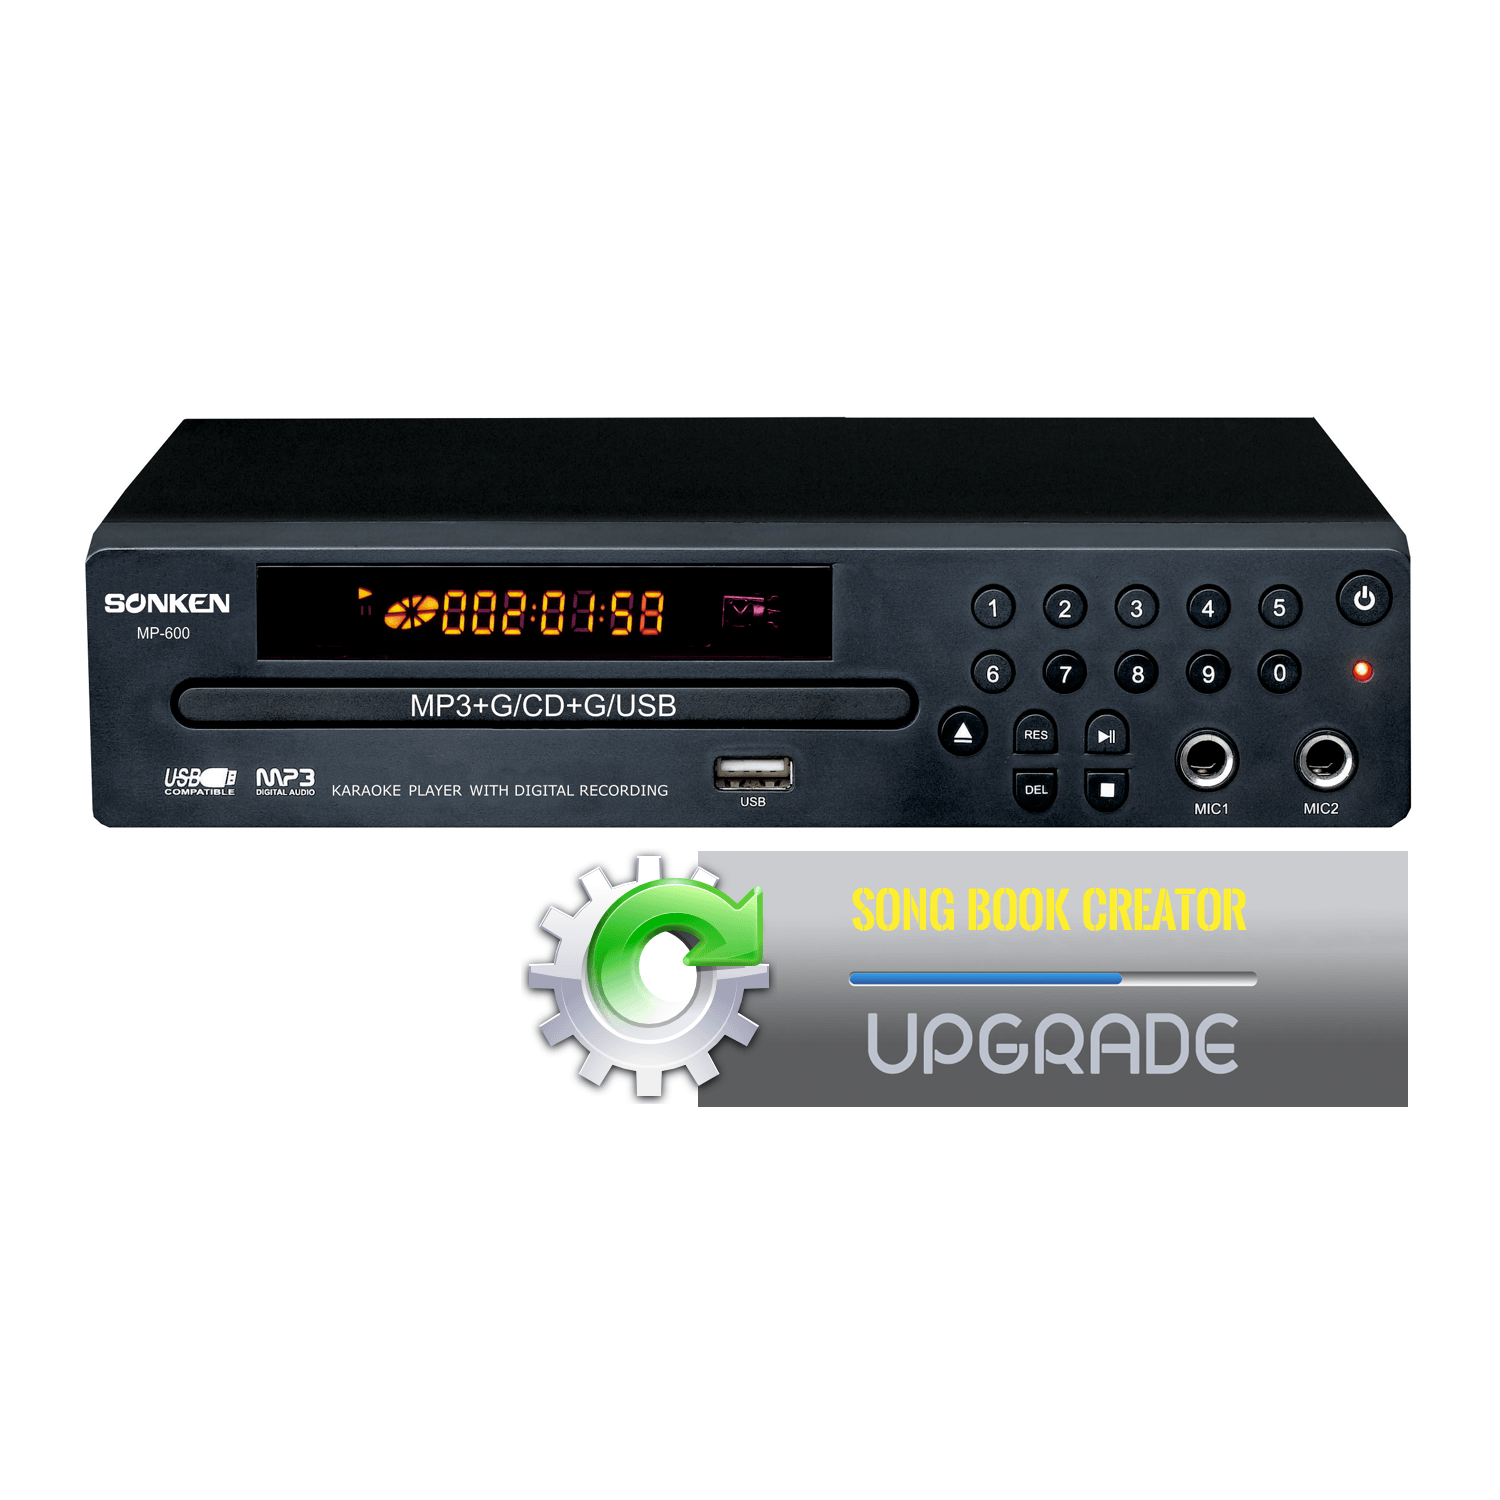 Song Book Creator Firmware Update for Sonken MP600 Karaoke Machine - Karaoke Home Entertainment